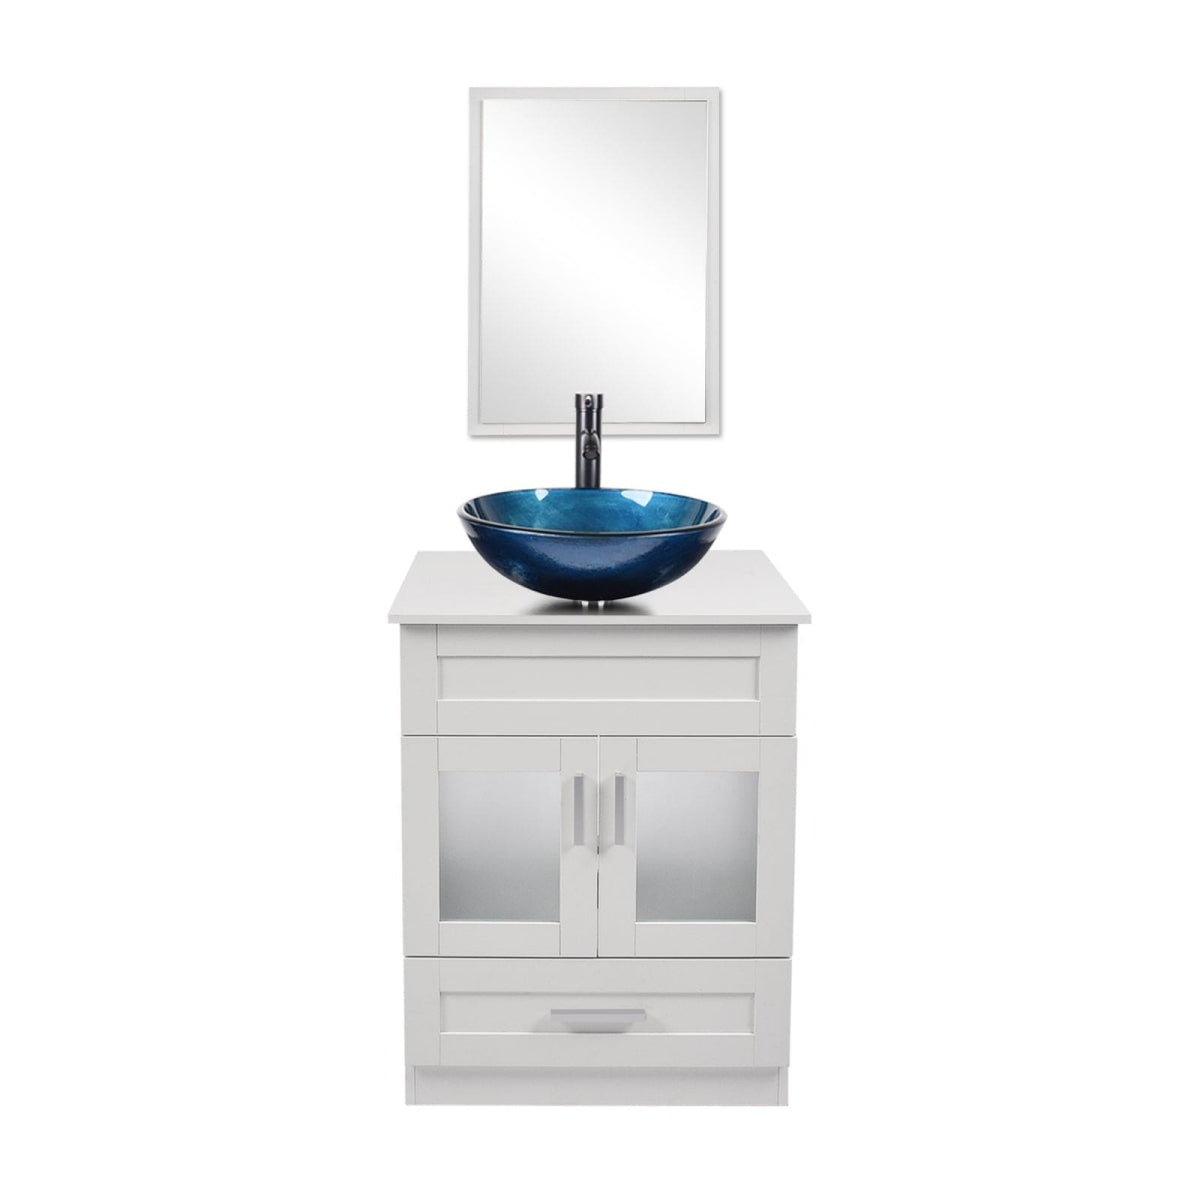 Elecwish White Bathroom Vanity with Blue Round Sink Set BA1001-WH